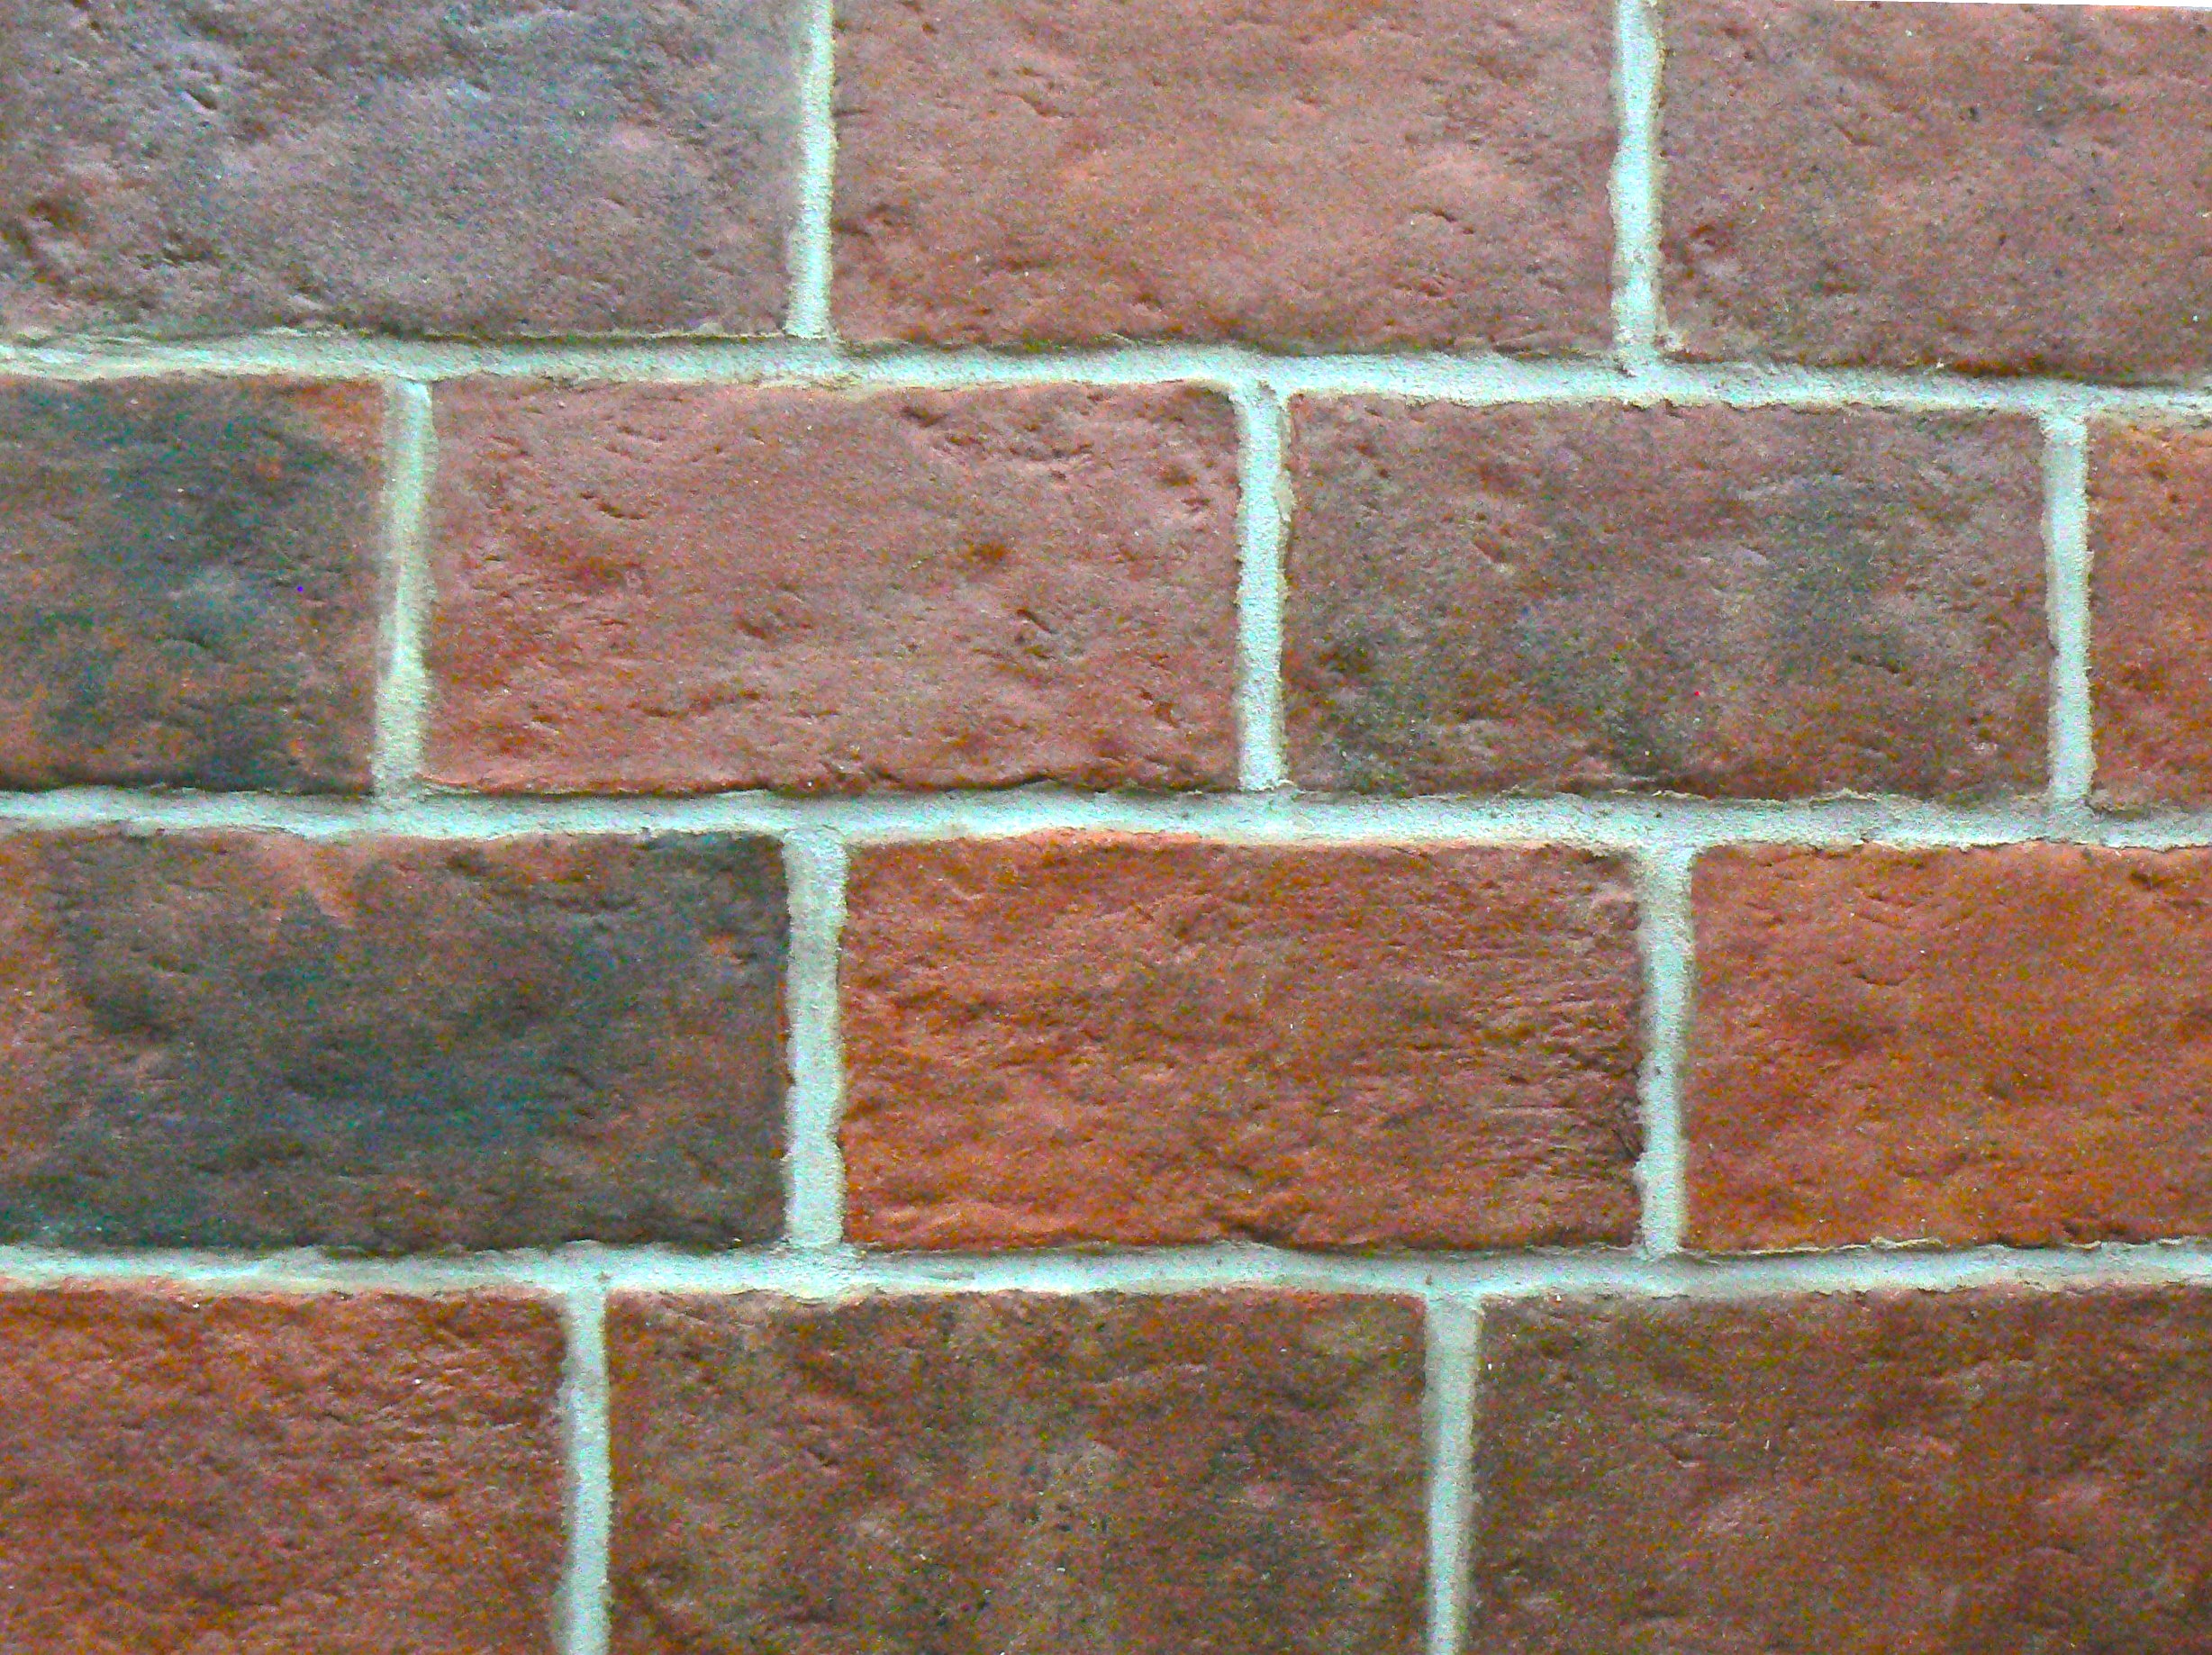 Flemish bond 2×4″ brick tile | News from Inglenook Tile